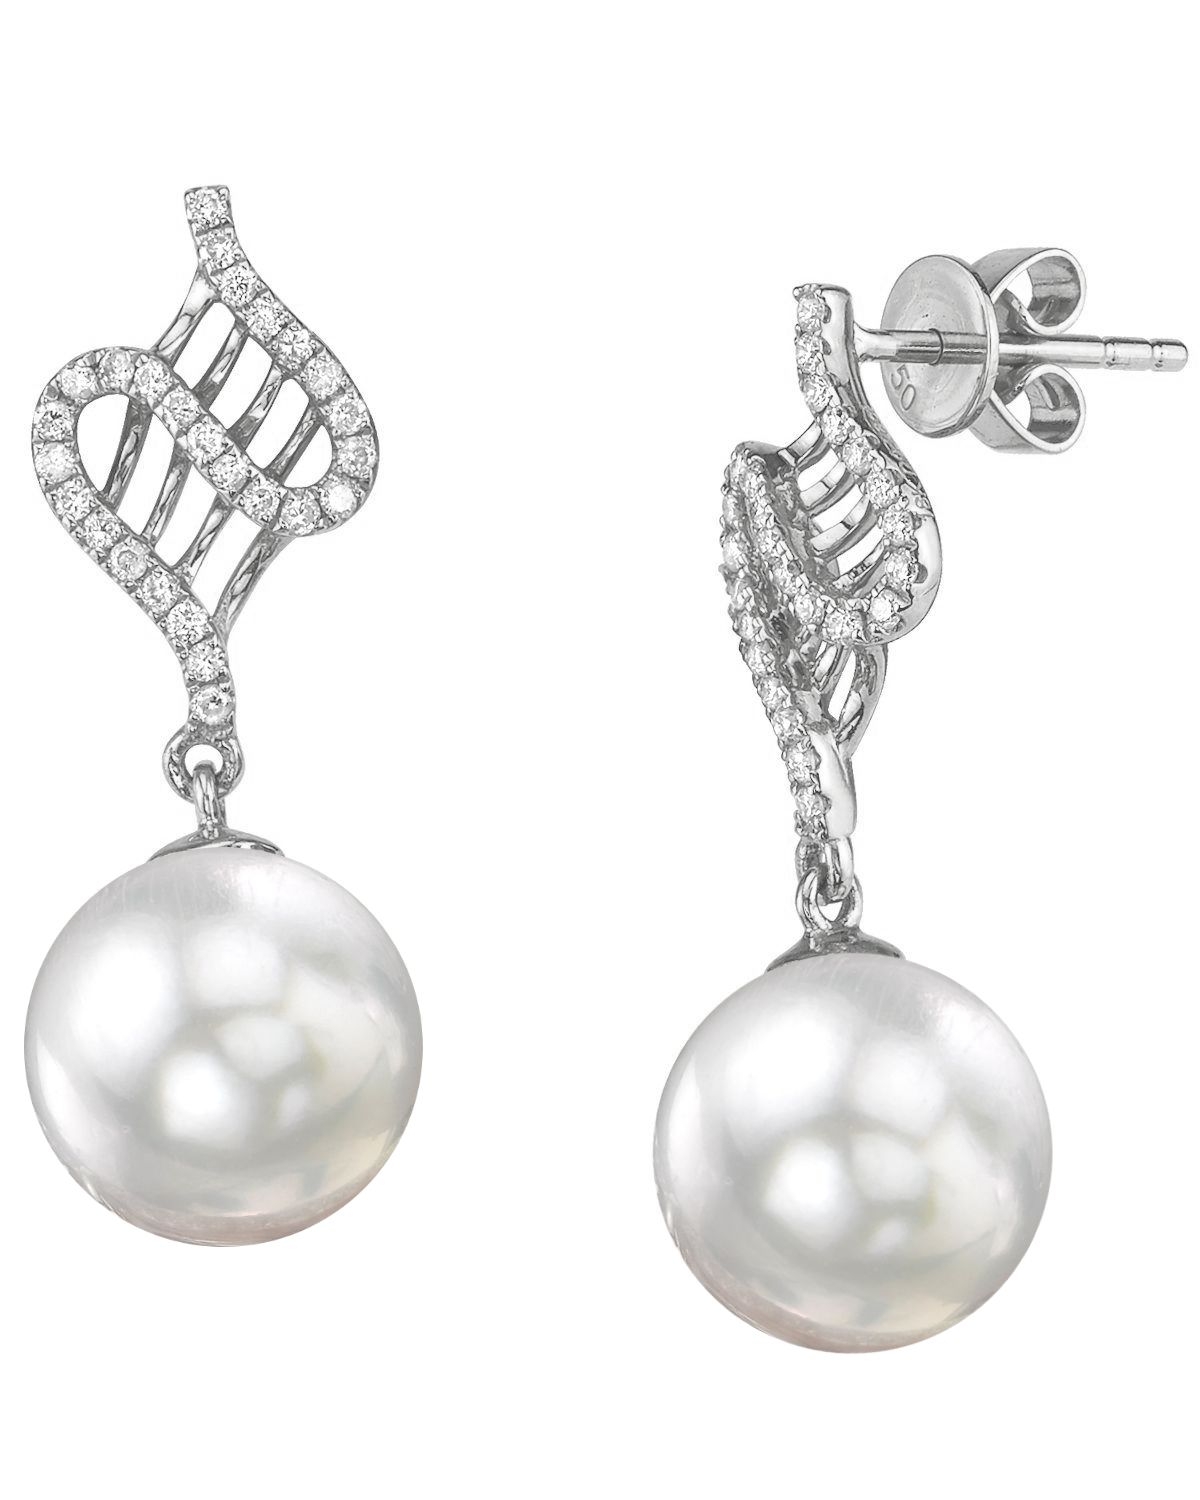 Buy White Akoya Pearl & Diamond Nancy Earrings for $ 1,469 - The Pearl ...